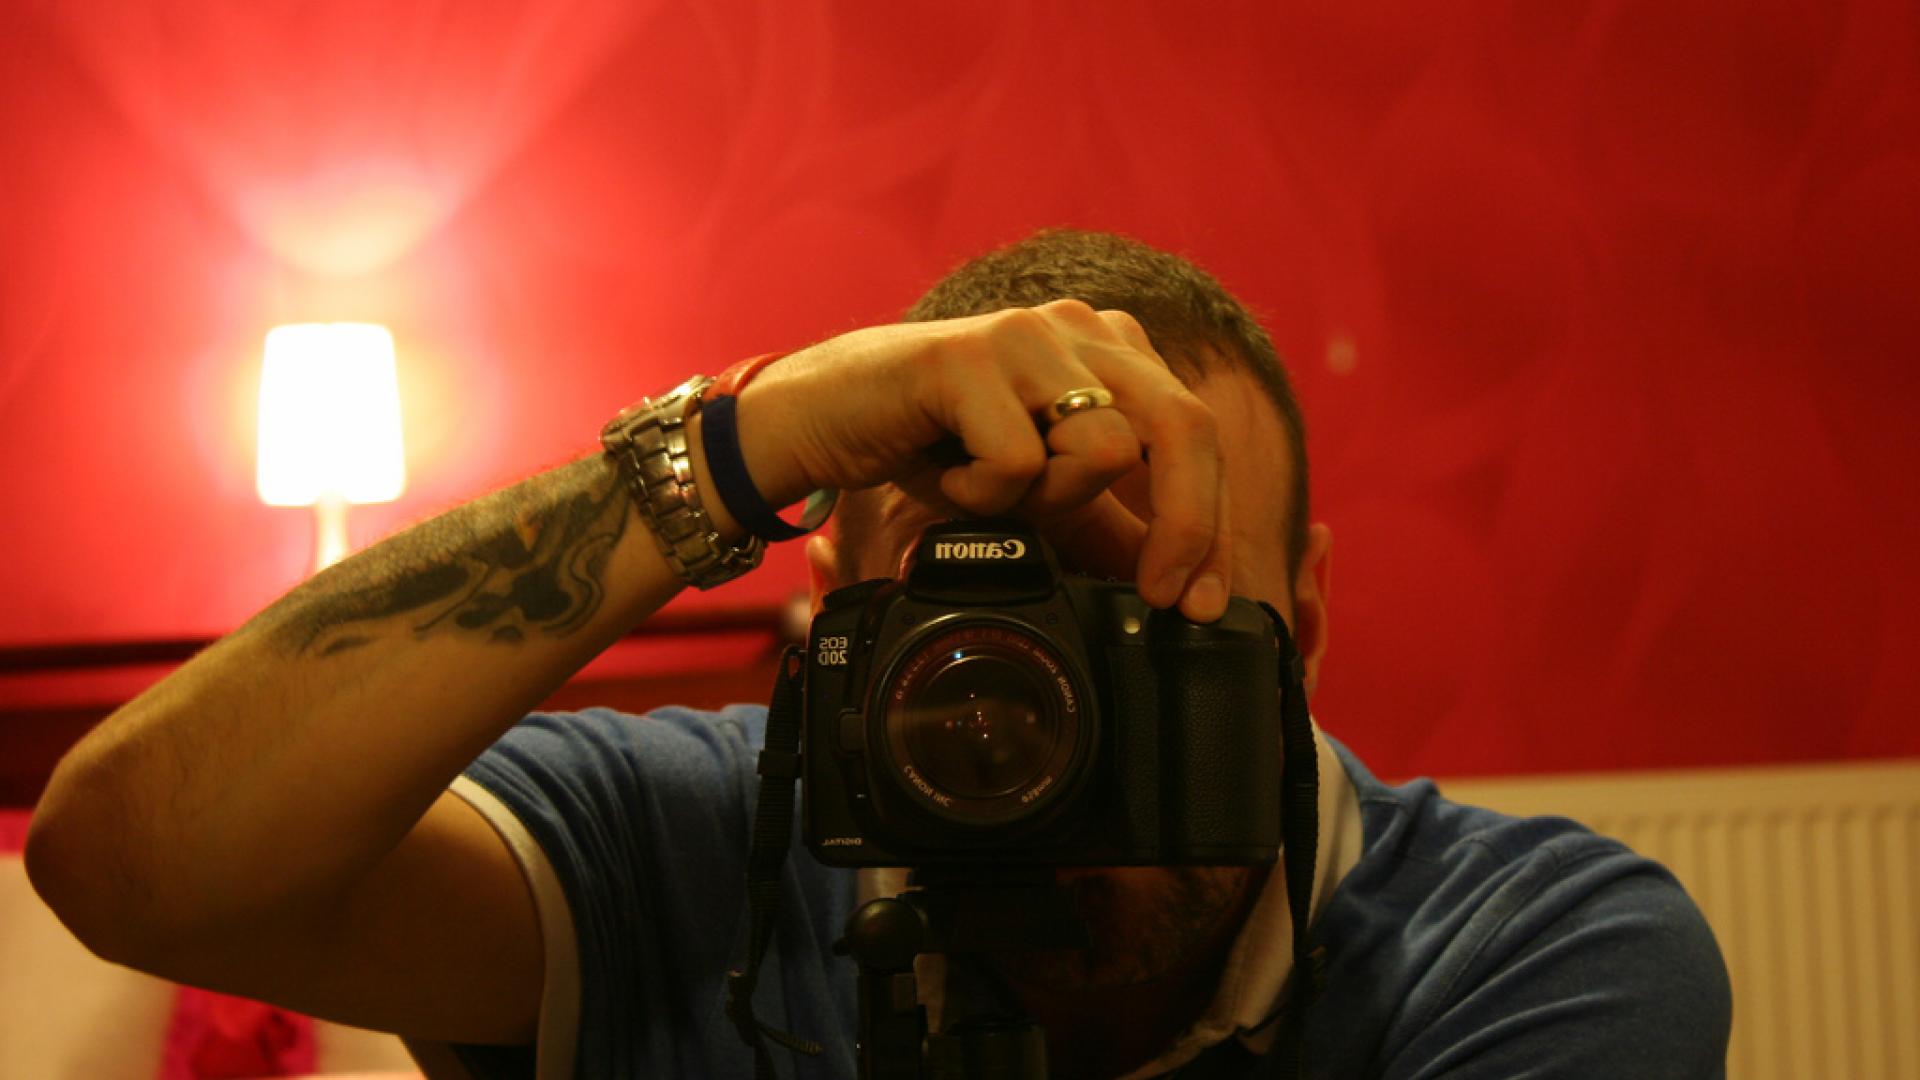 photo of man taking photo